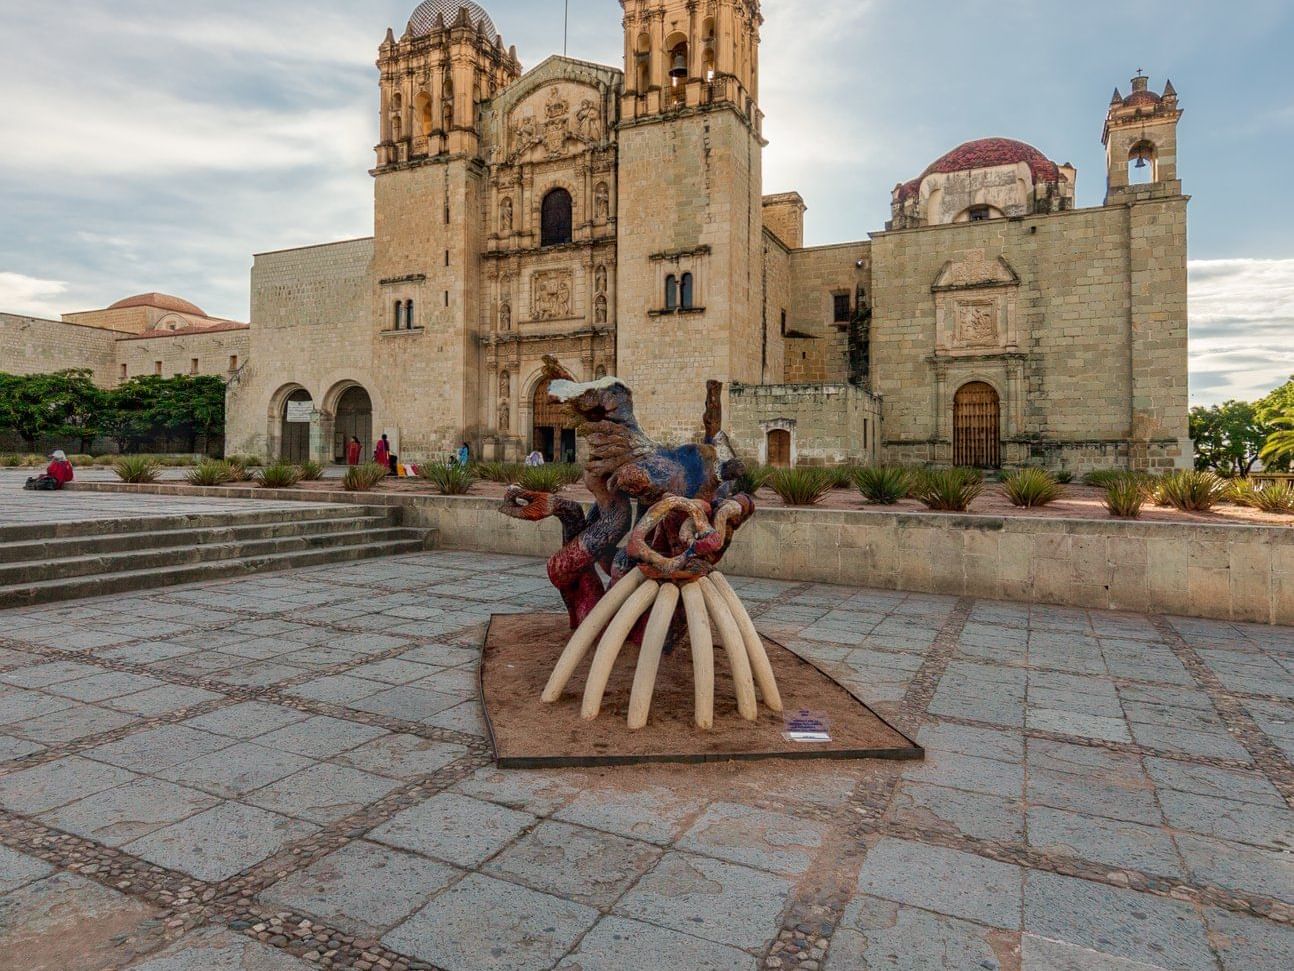 Statue in the Main plaza in the Oaxaca city